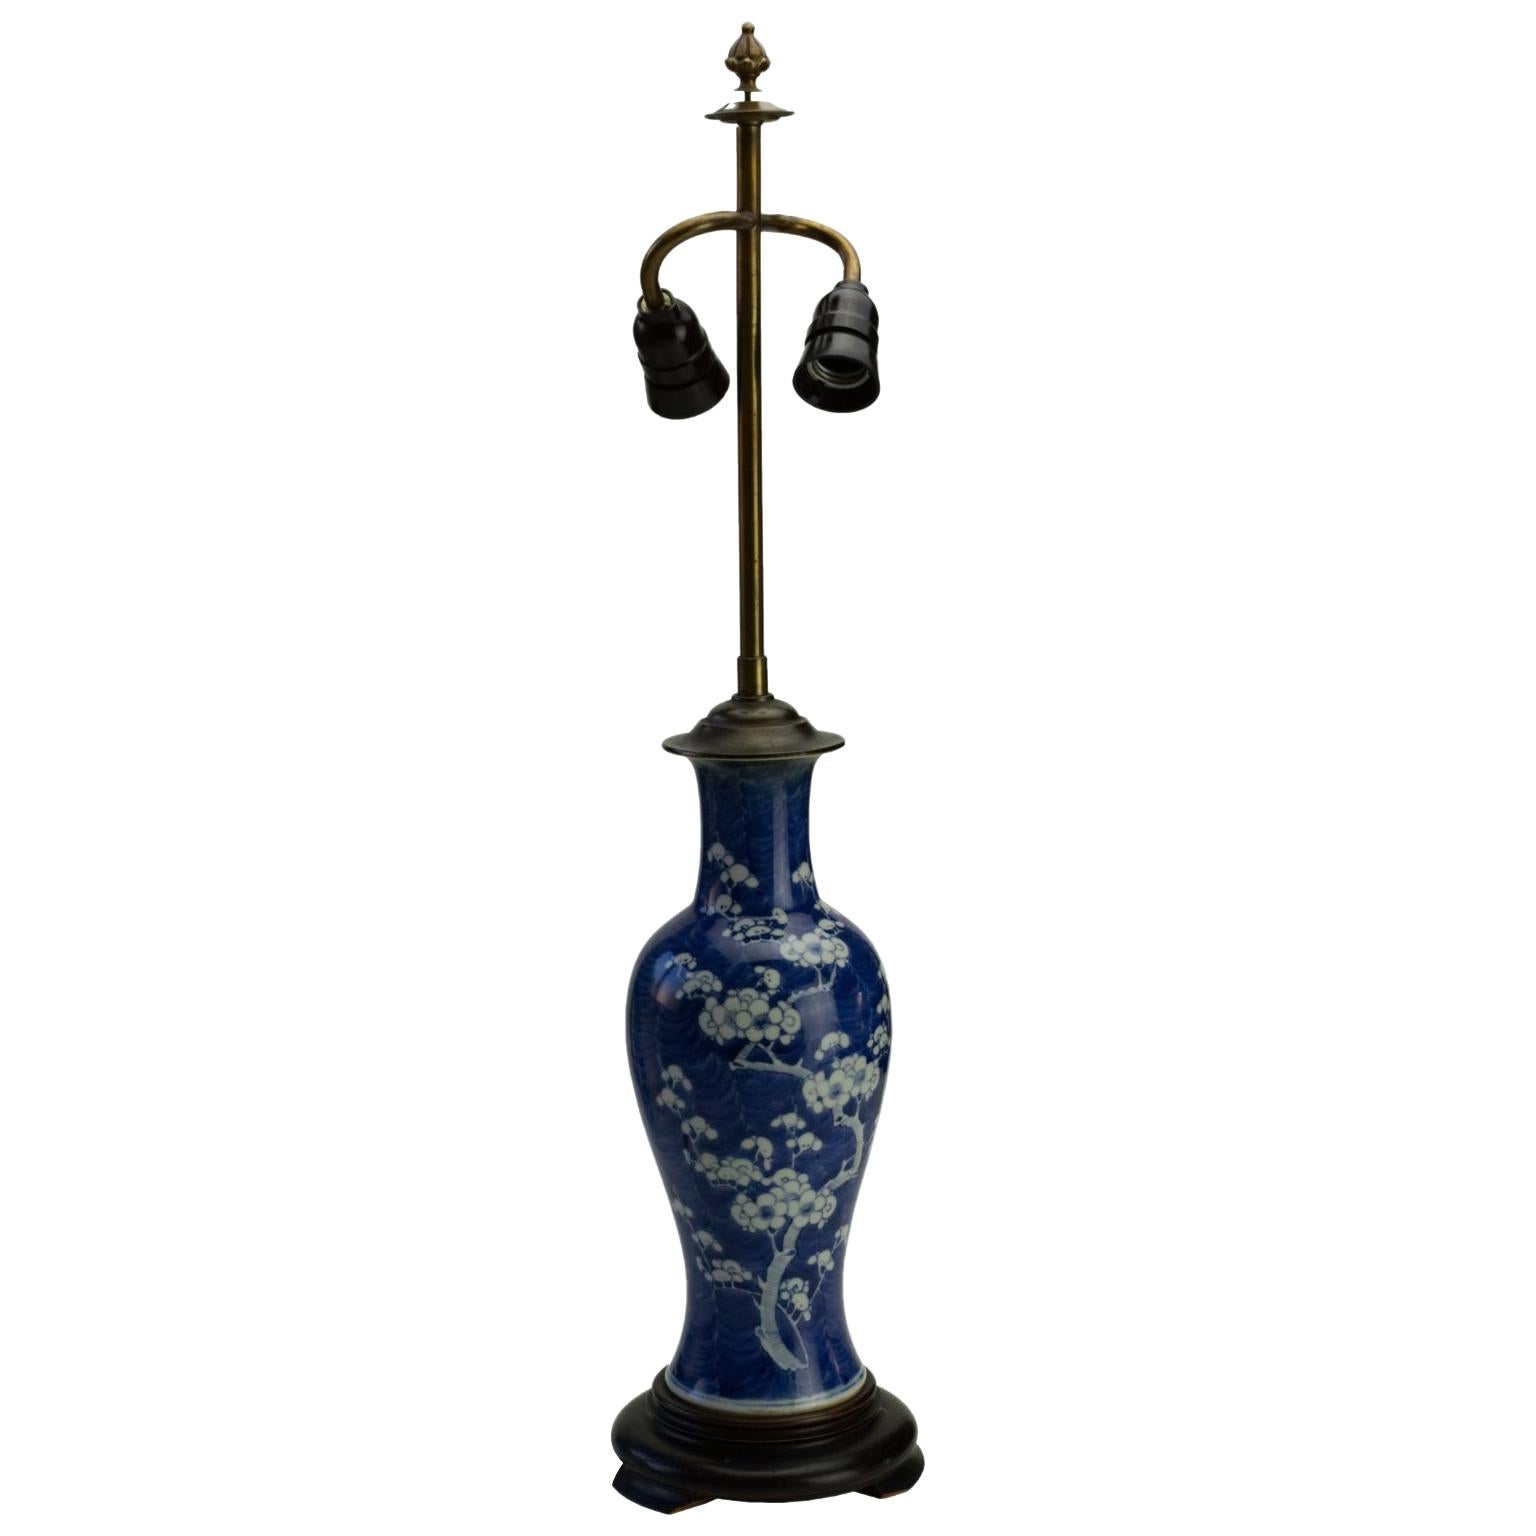 Chinese Export Prunus Vase Lamp, circa 1900